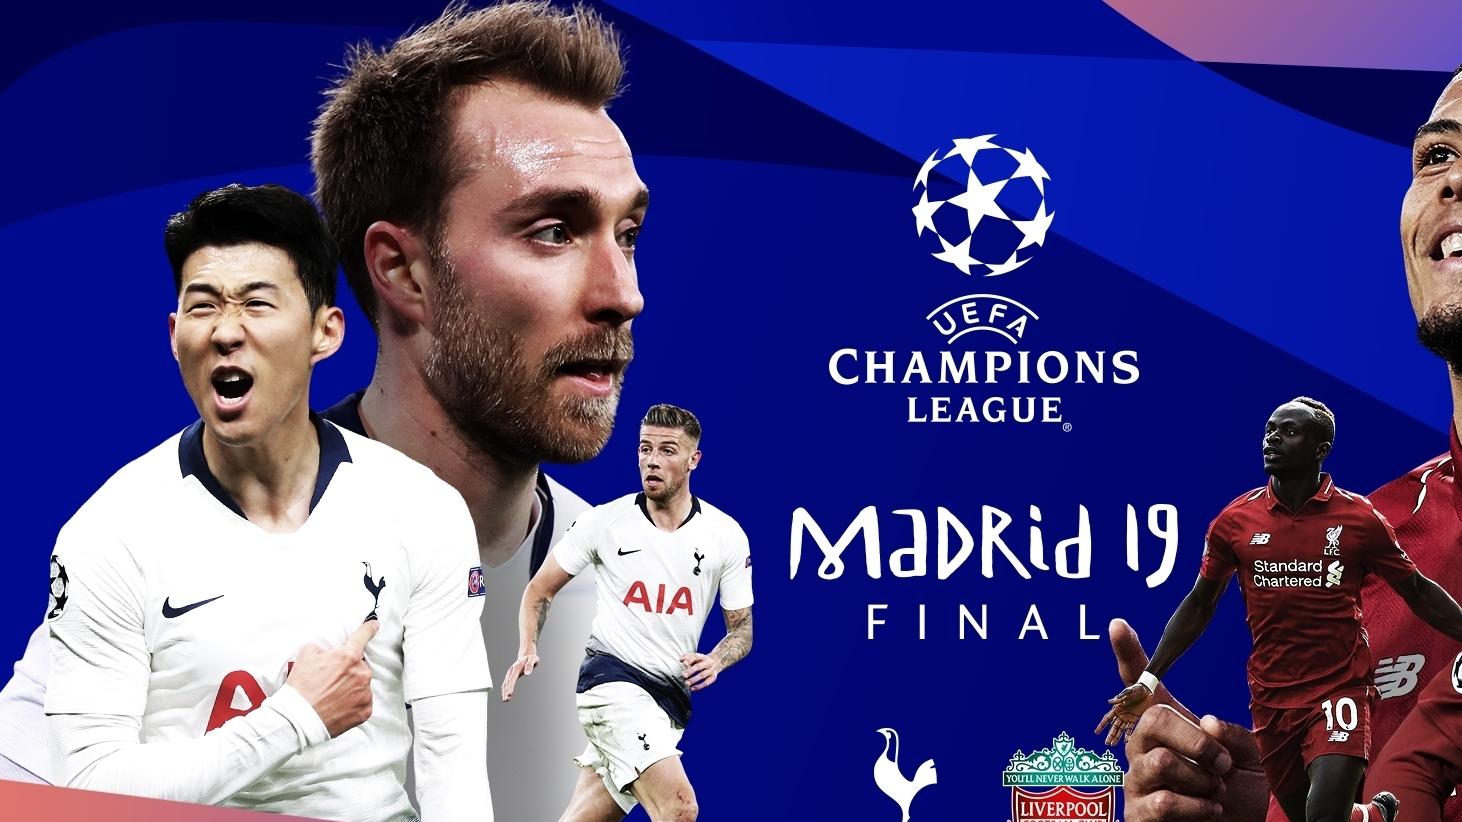 finala champions league 2019 tv